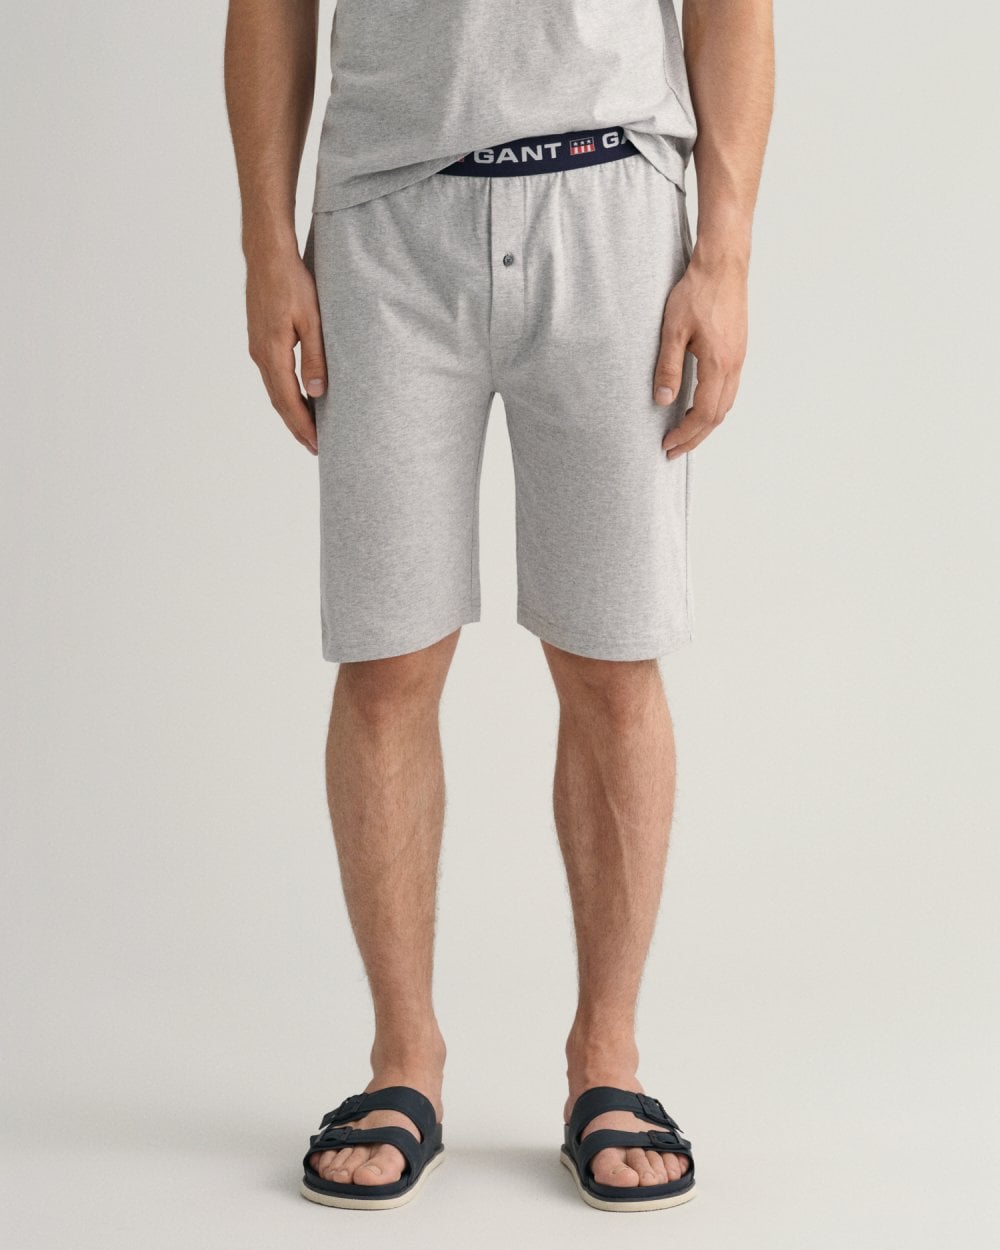 Jersey Pajama Shorts